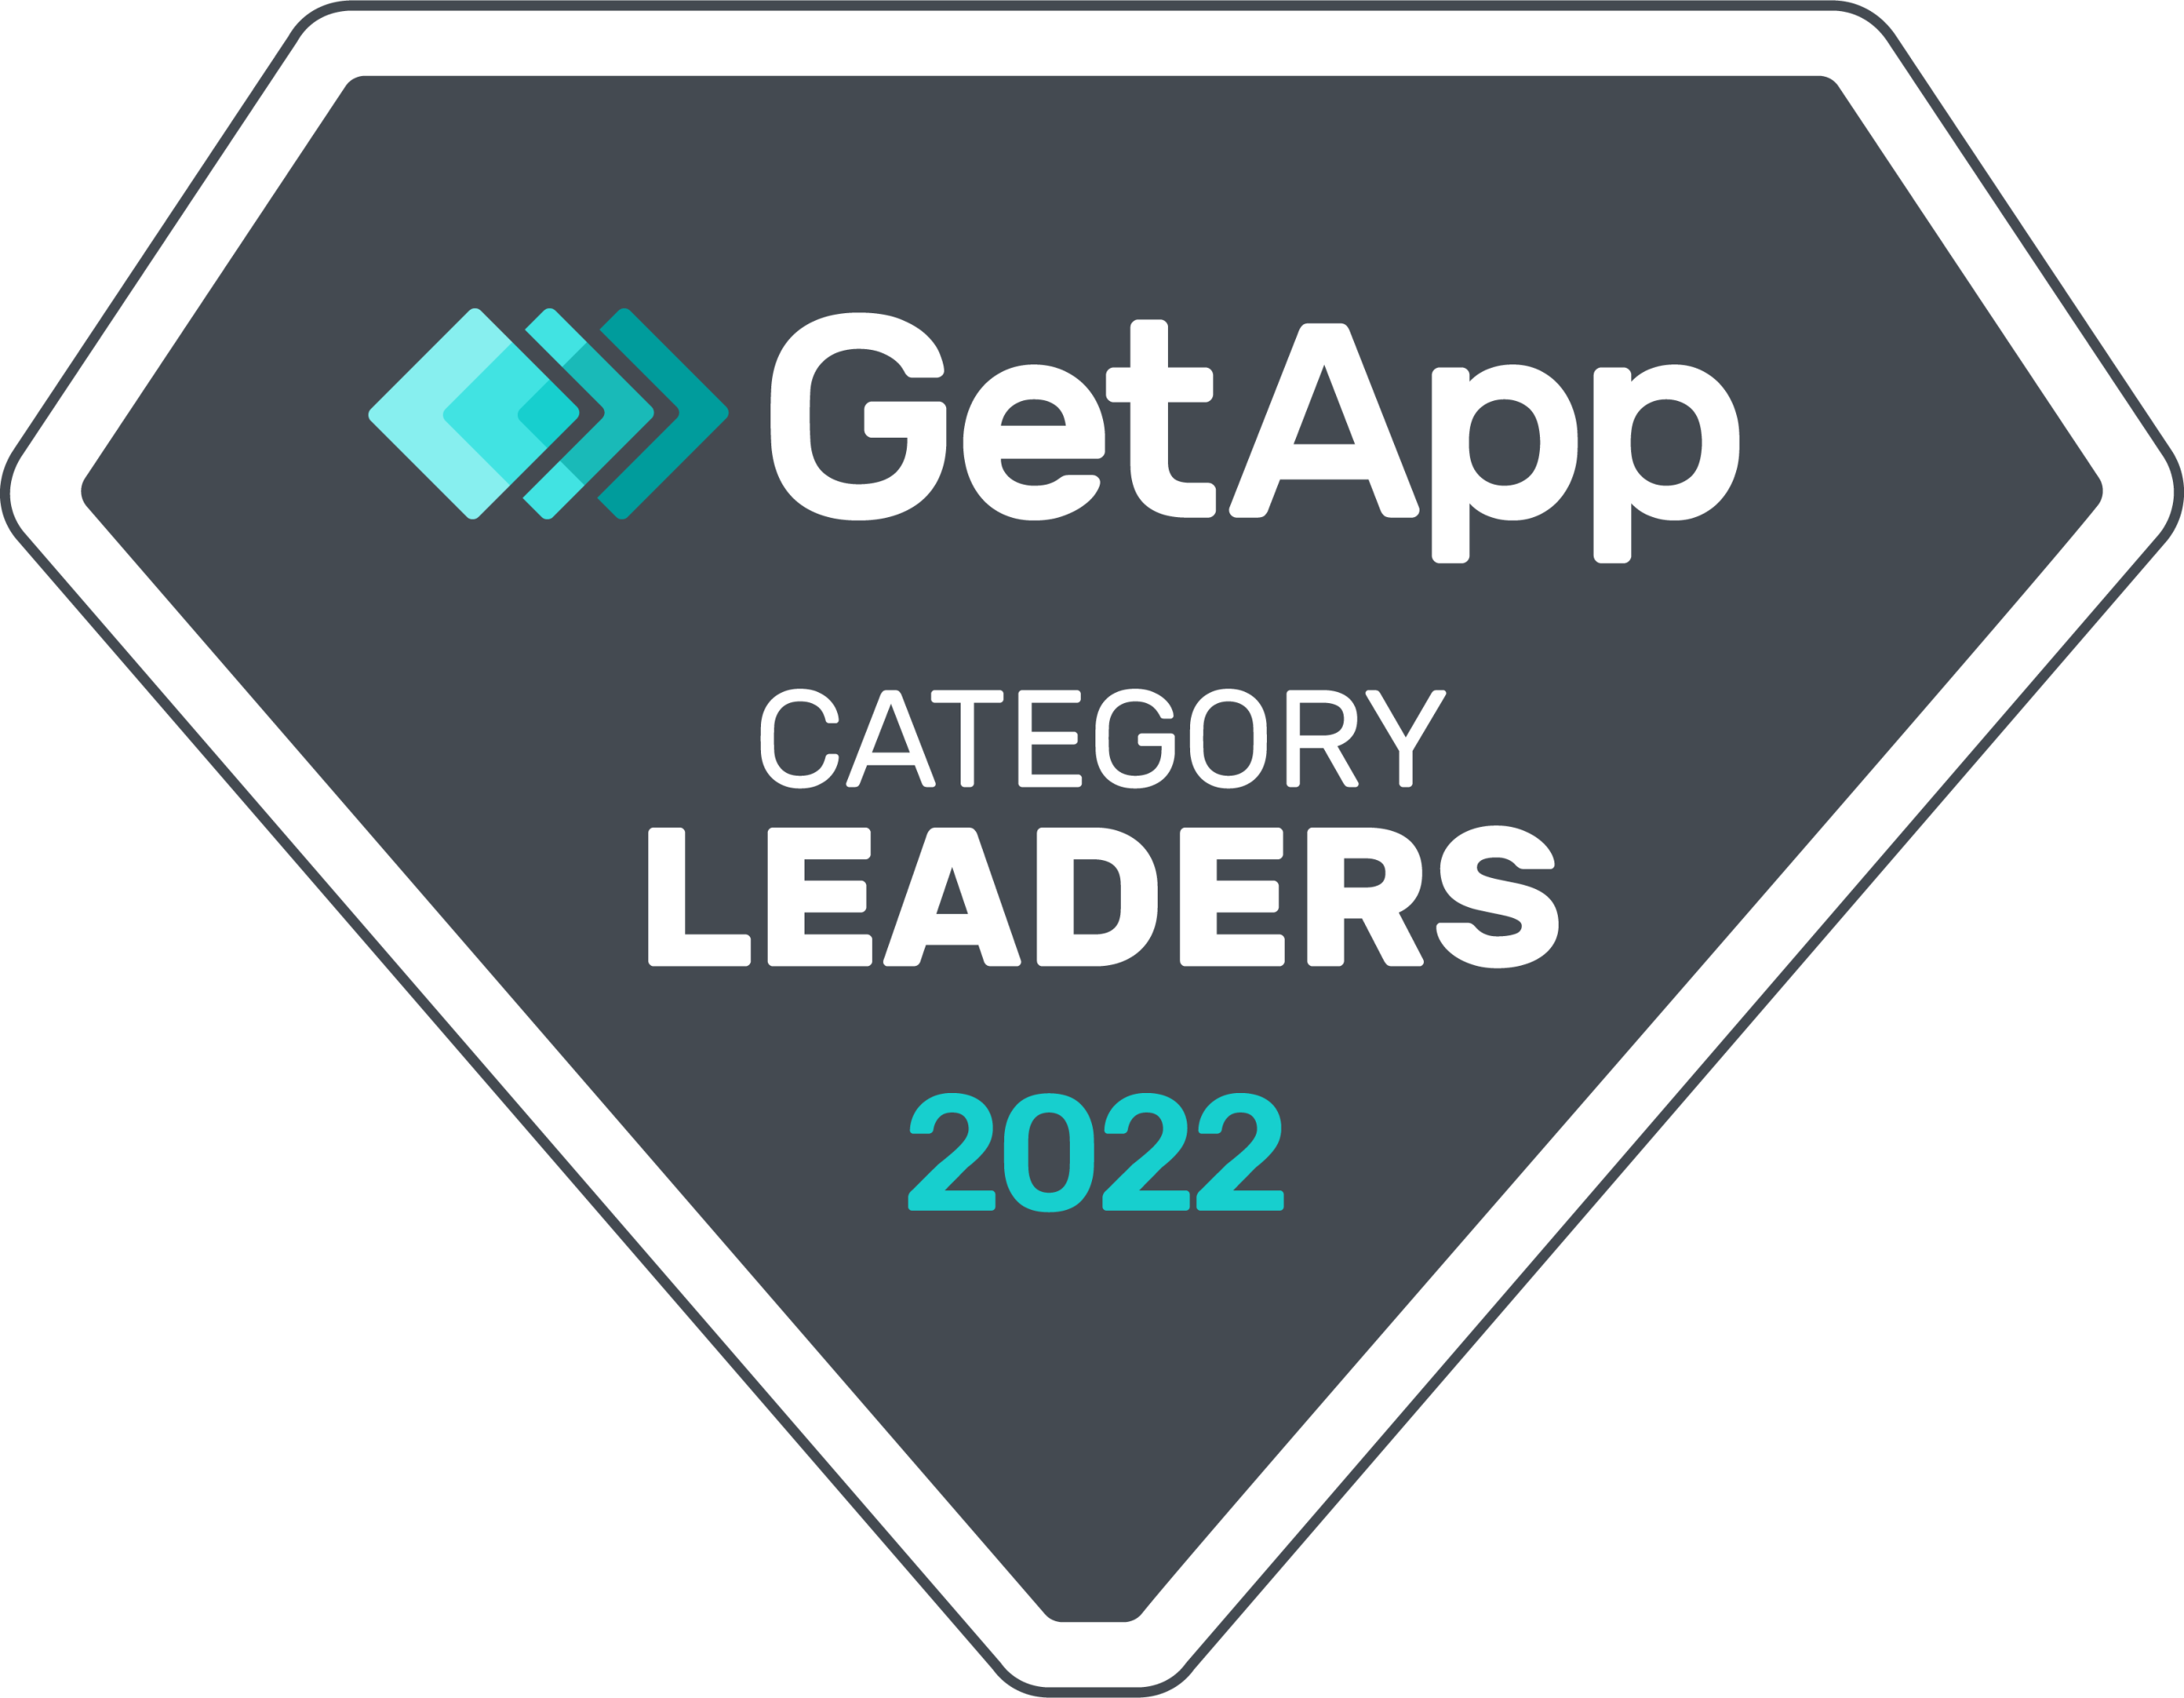 GetApp Roofing category leaders 2022